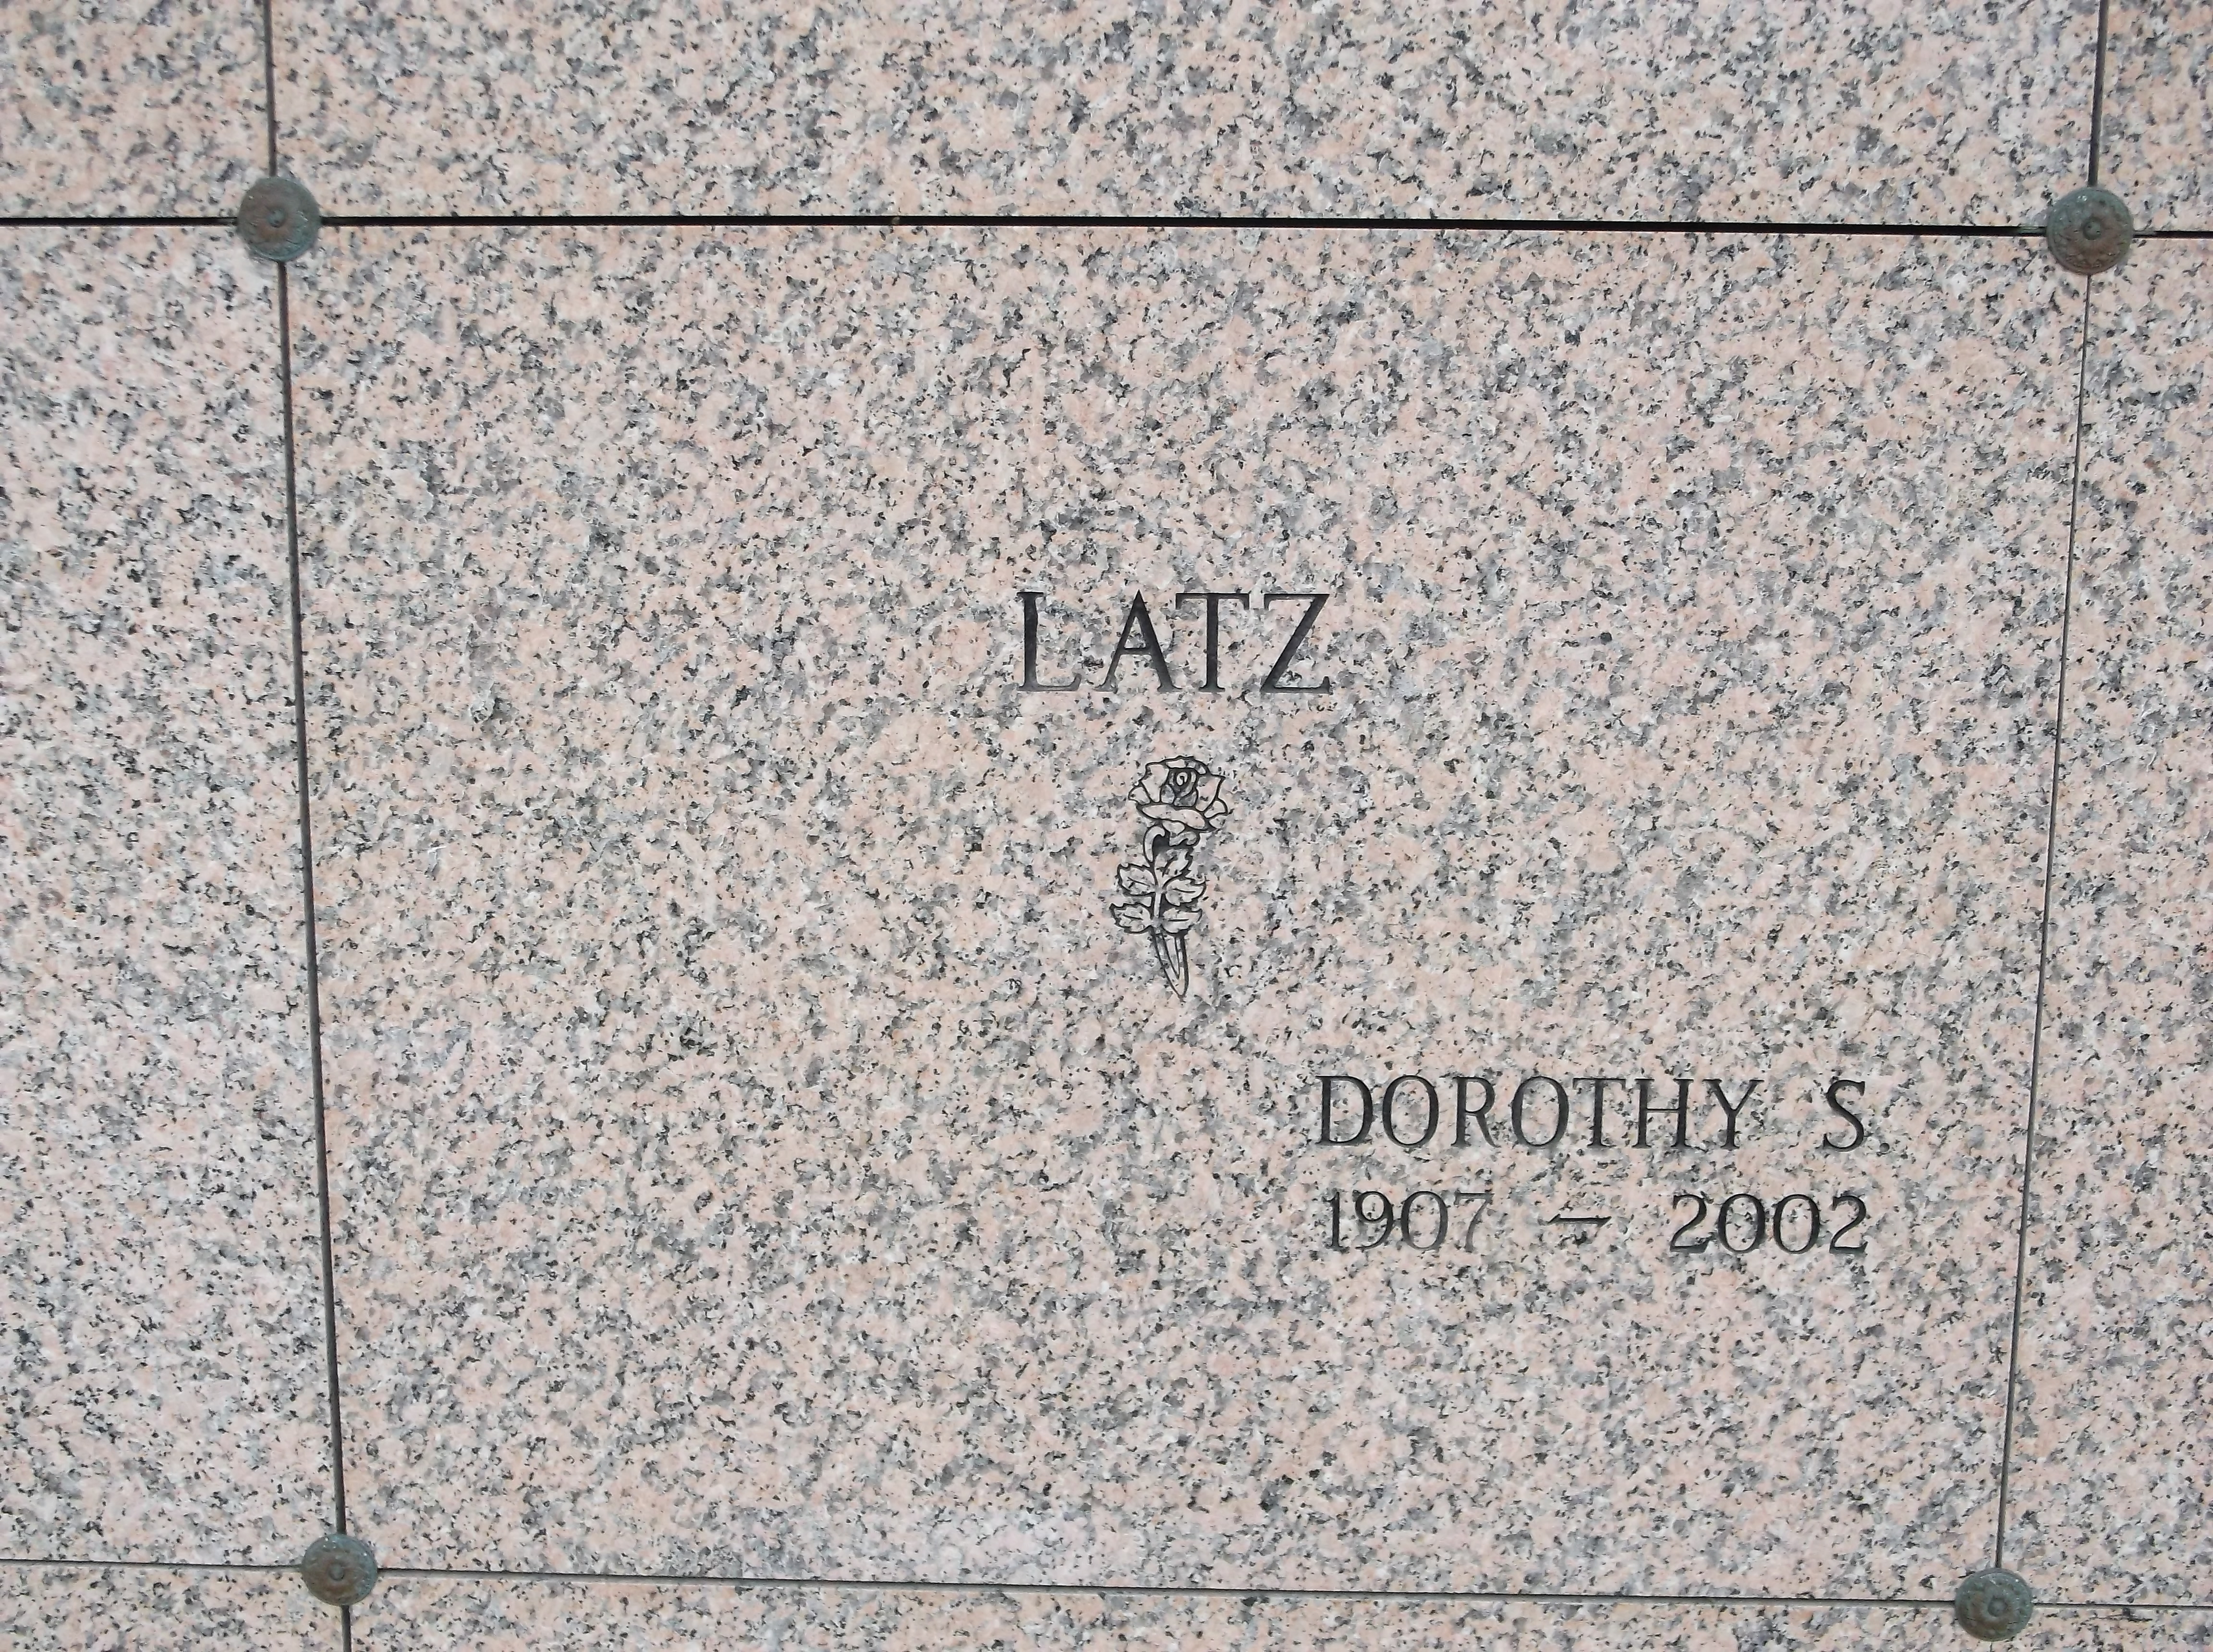 Dorothy S Latz